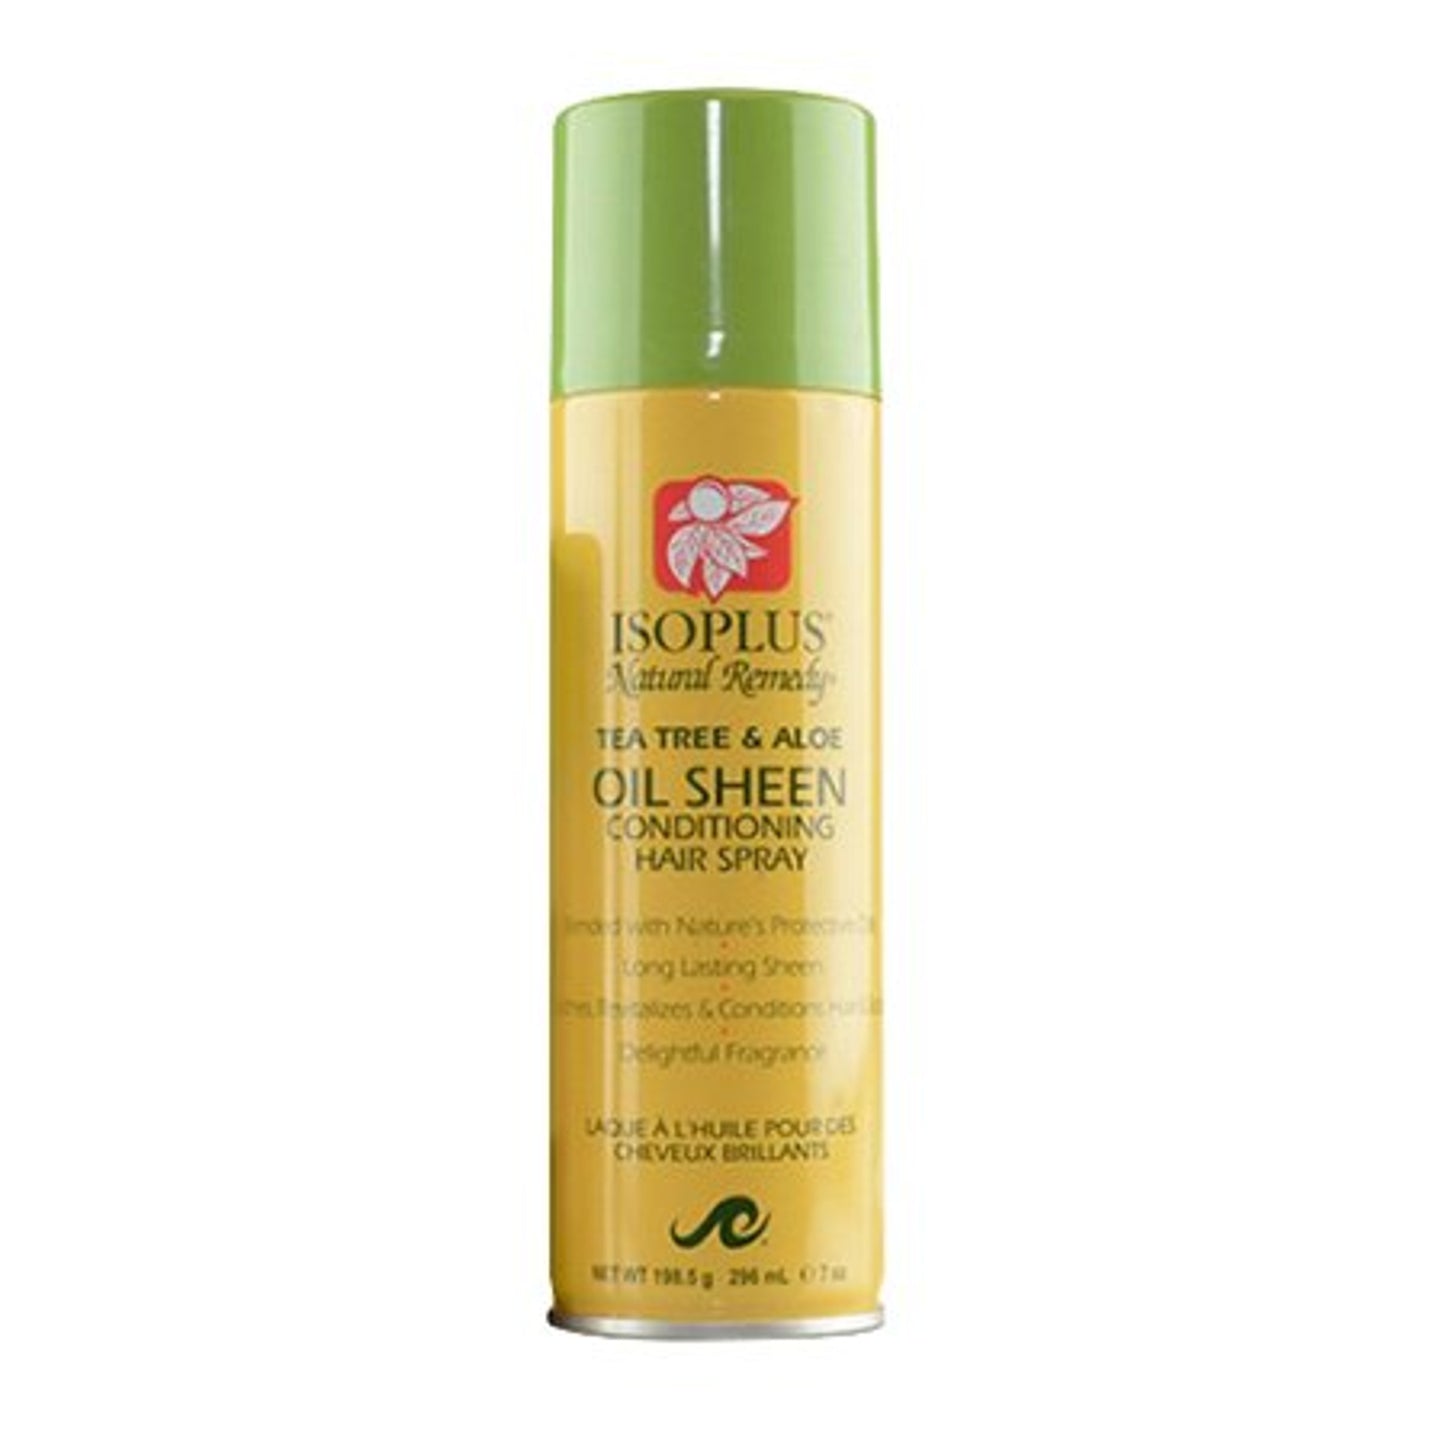 Isoplus Tea Tree and Aloe Oil Sheen Conditioning Hair Spray - 7oz